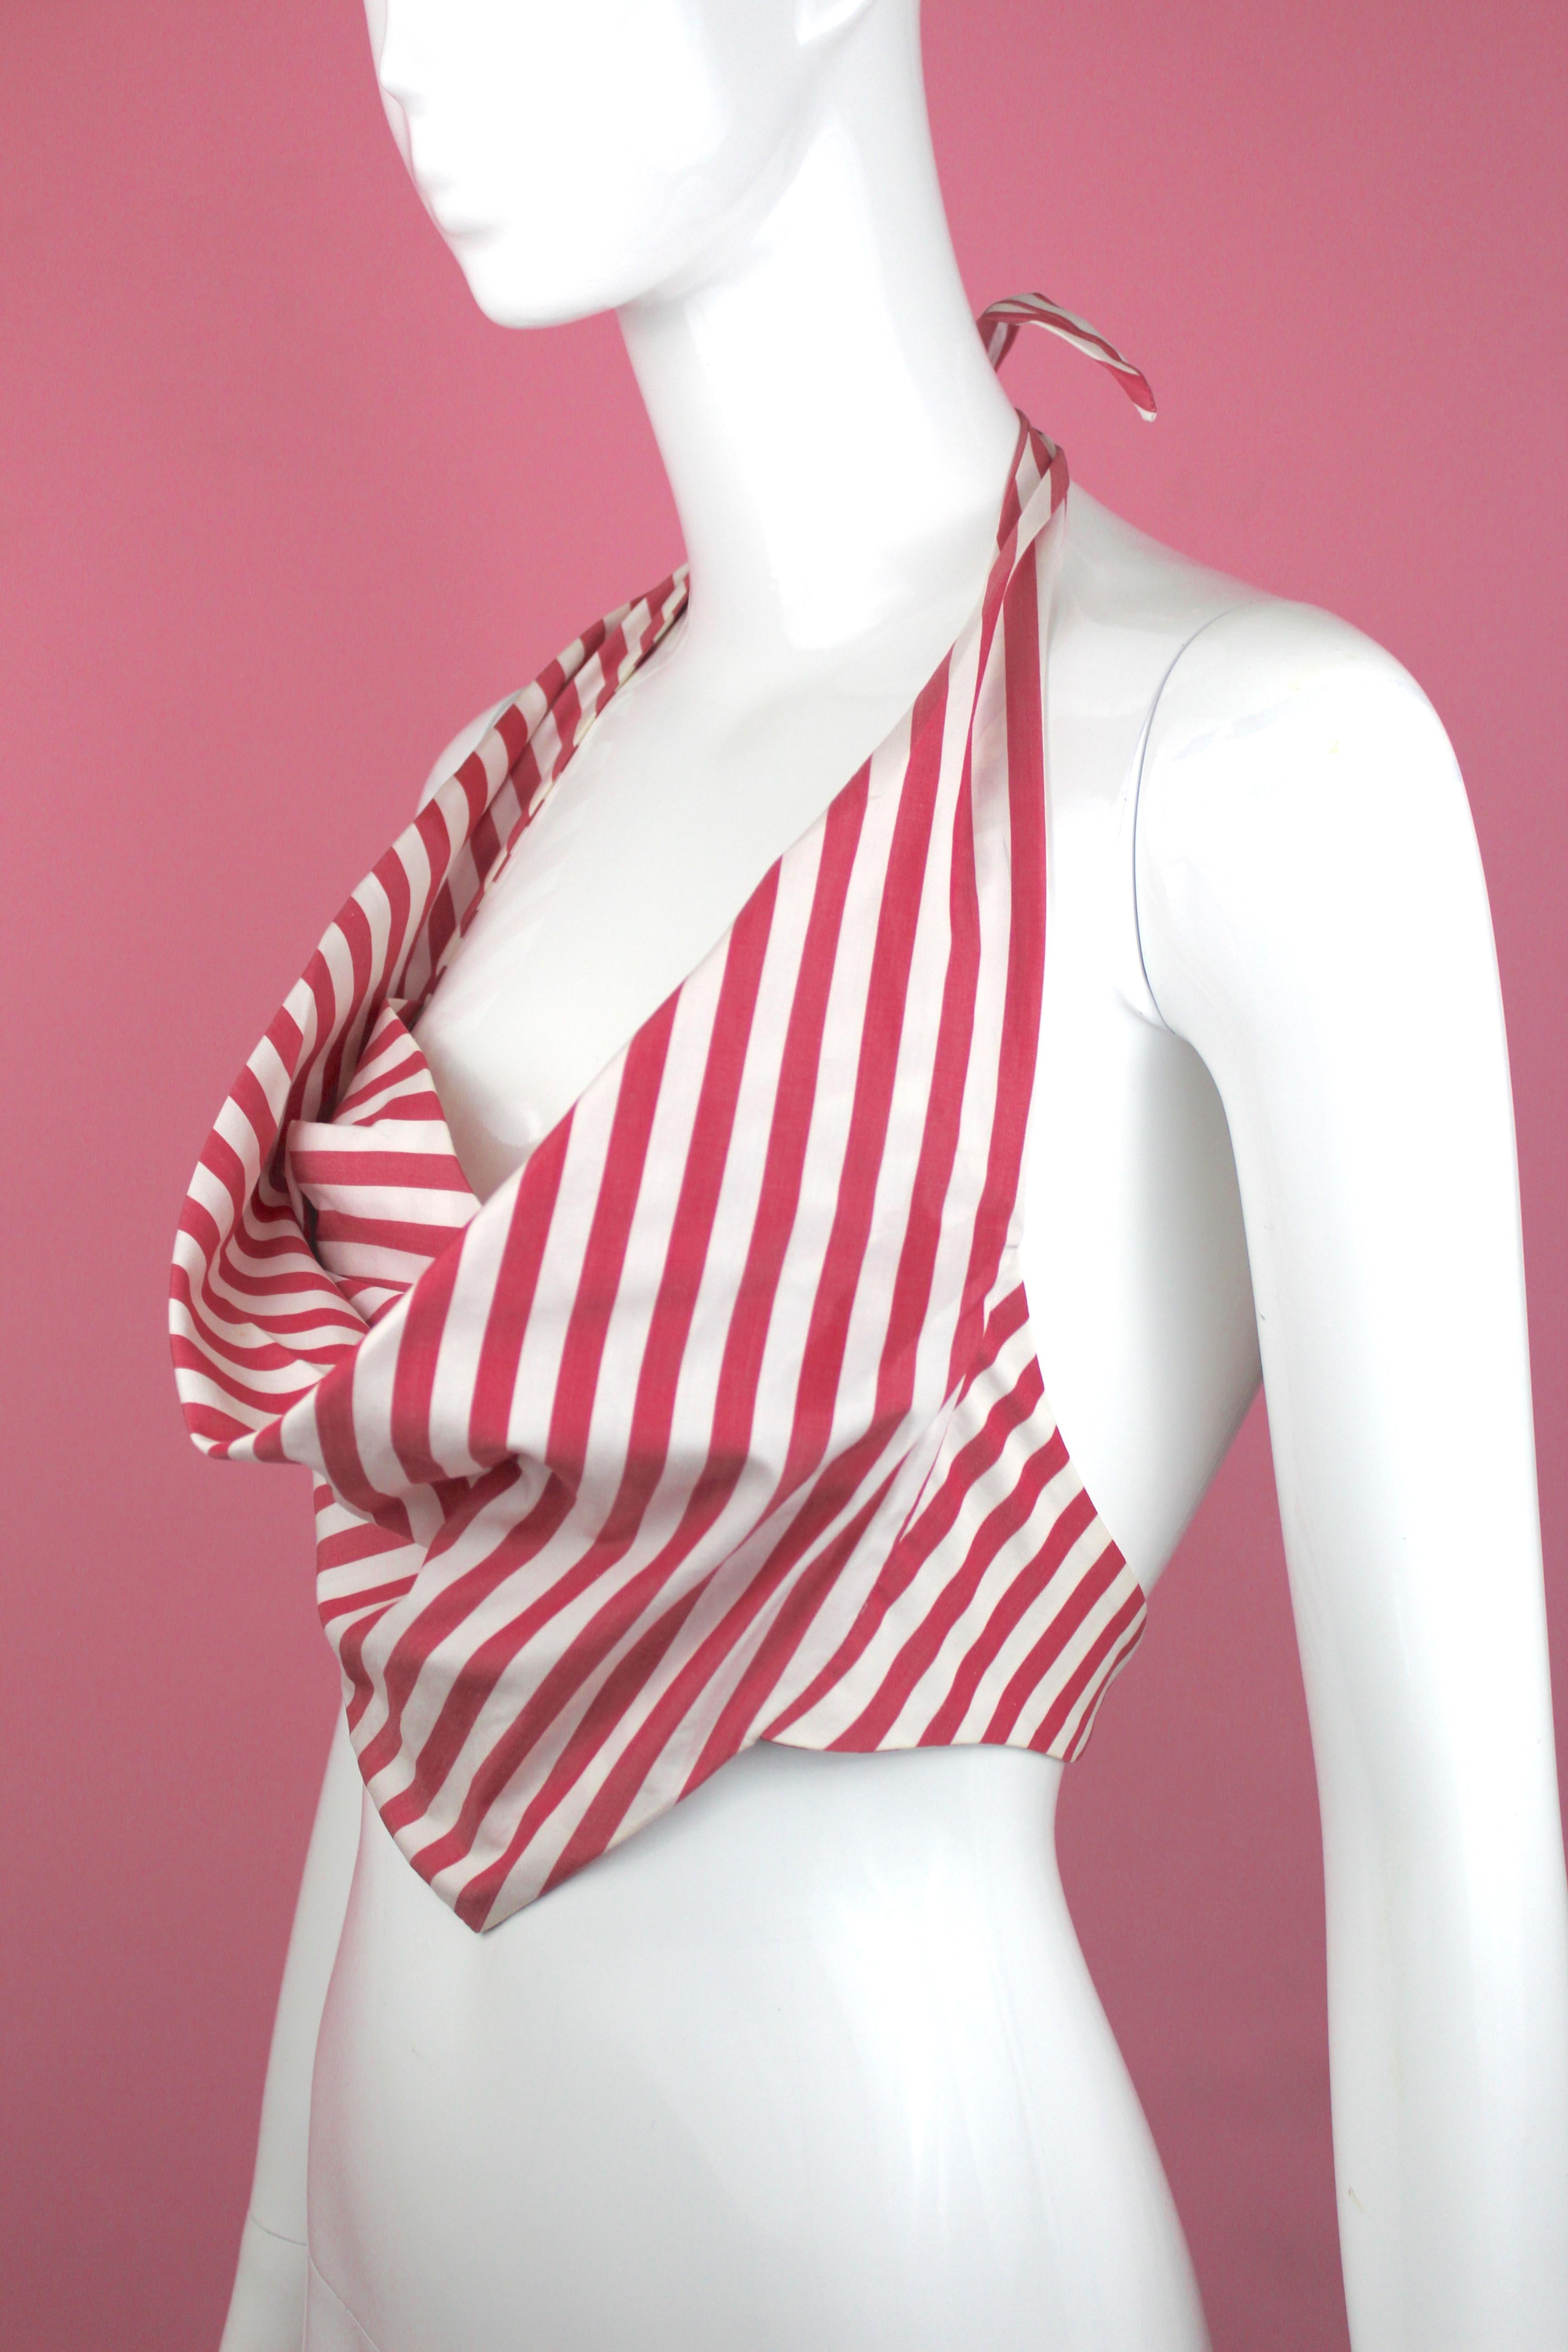 Brown Vivienne Westwood Candy Stripe Halter top, c. 90's, Size 4 US For Sale